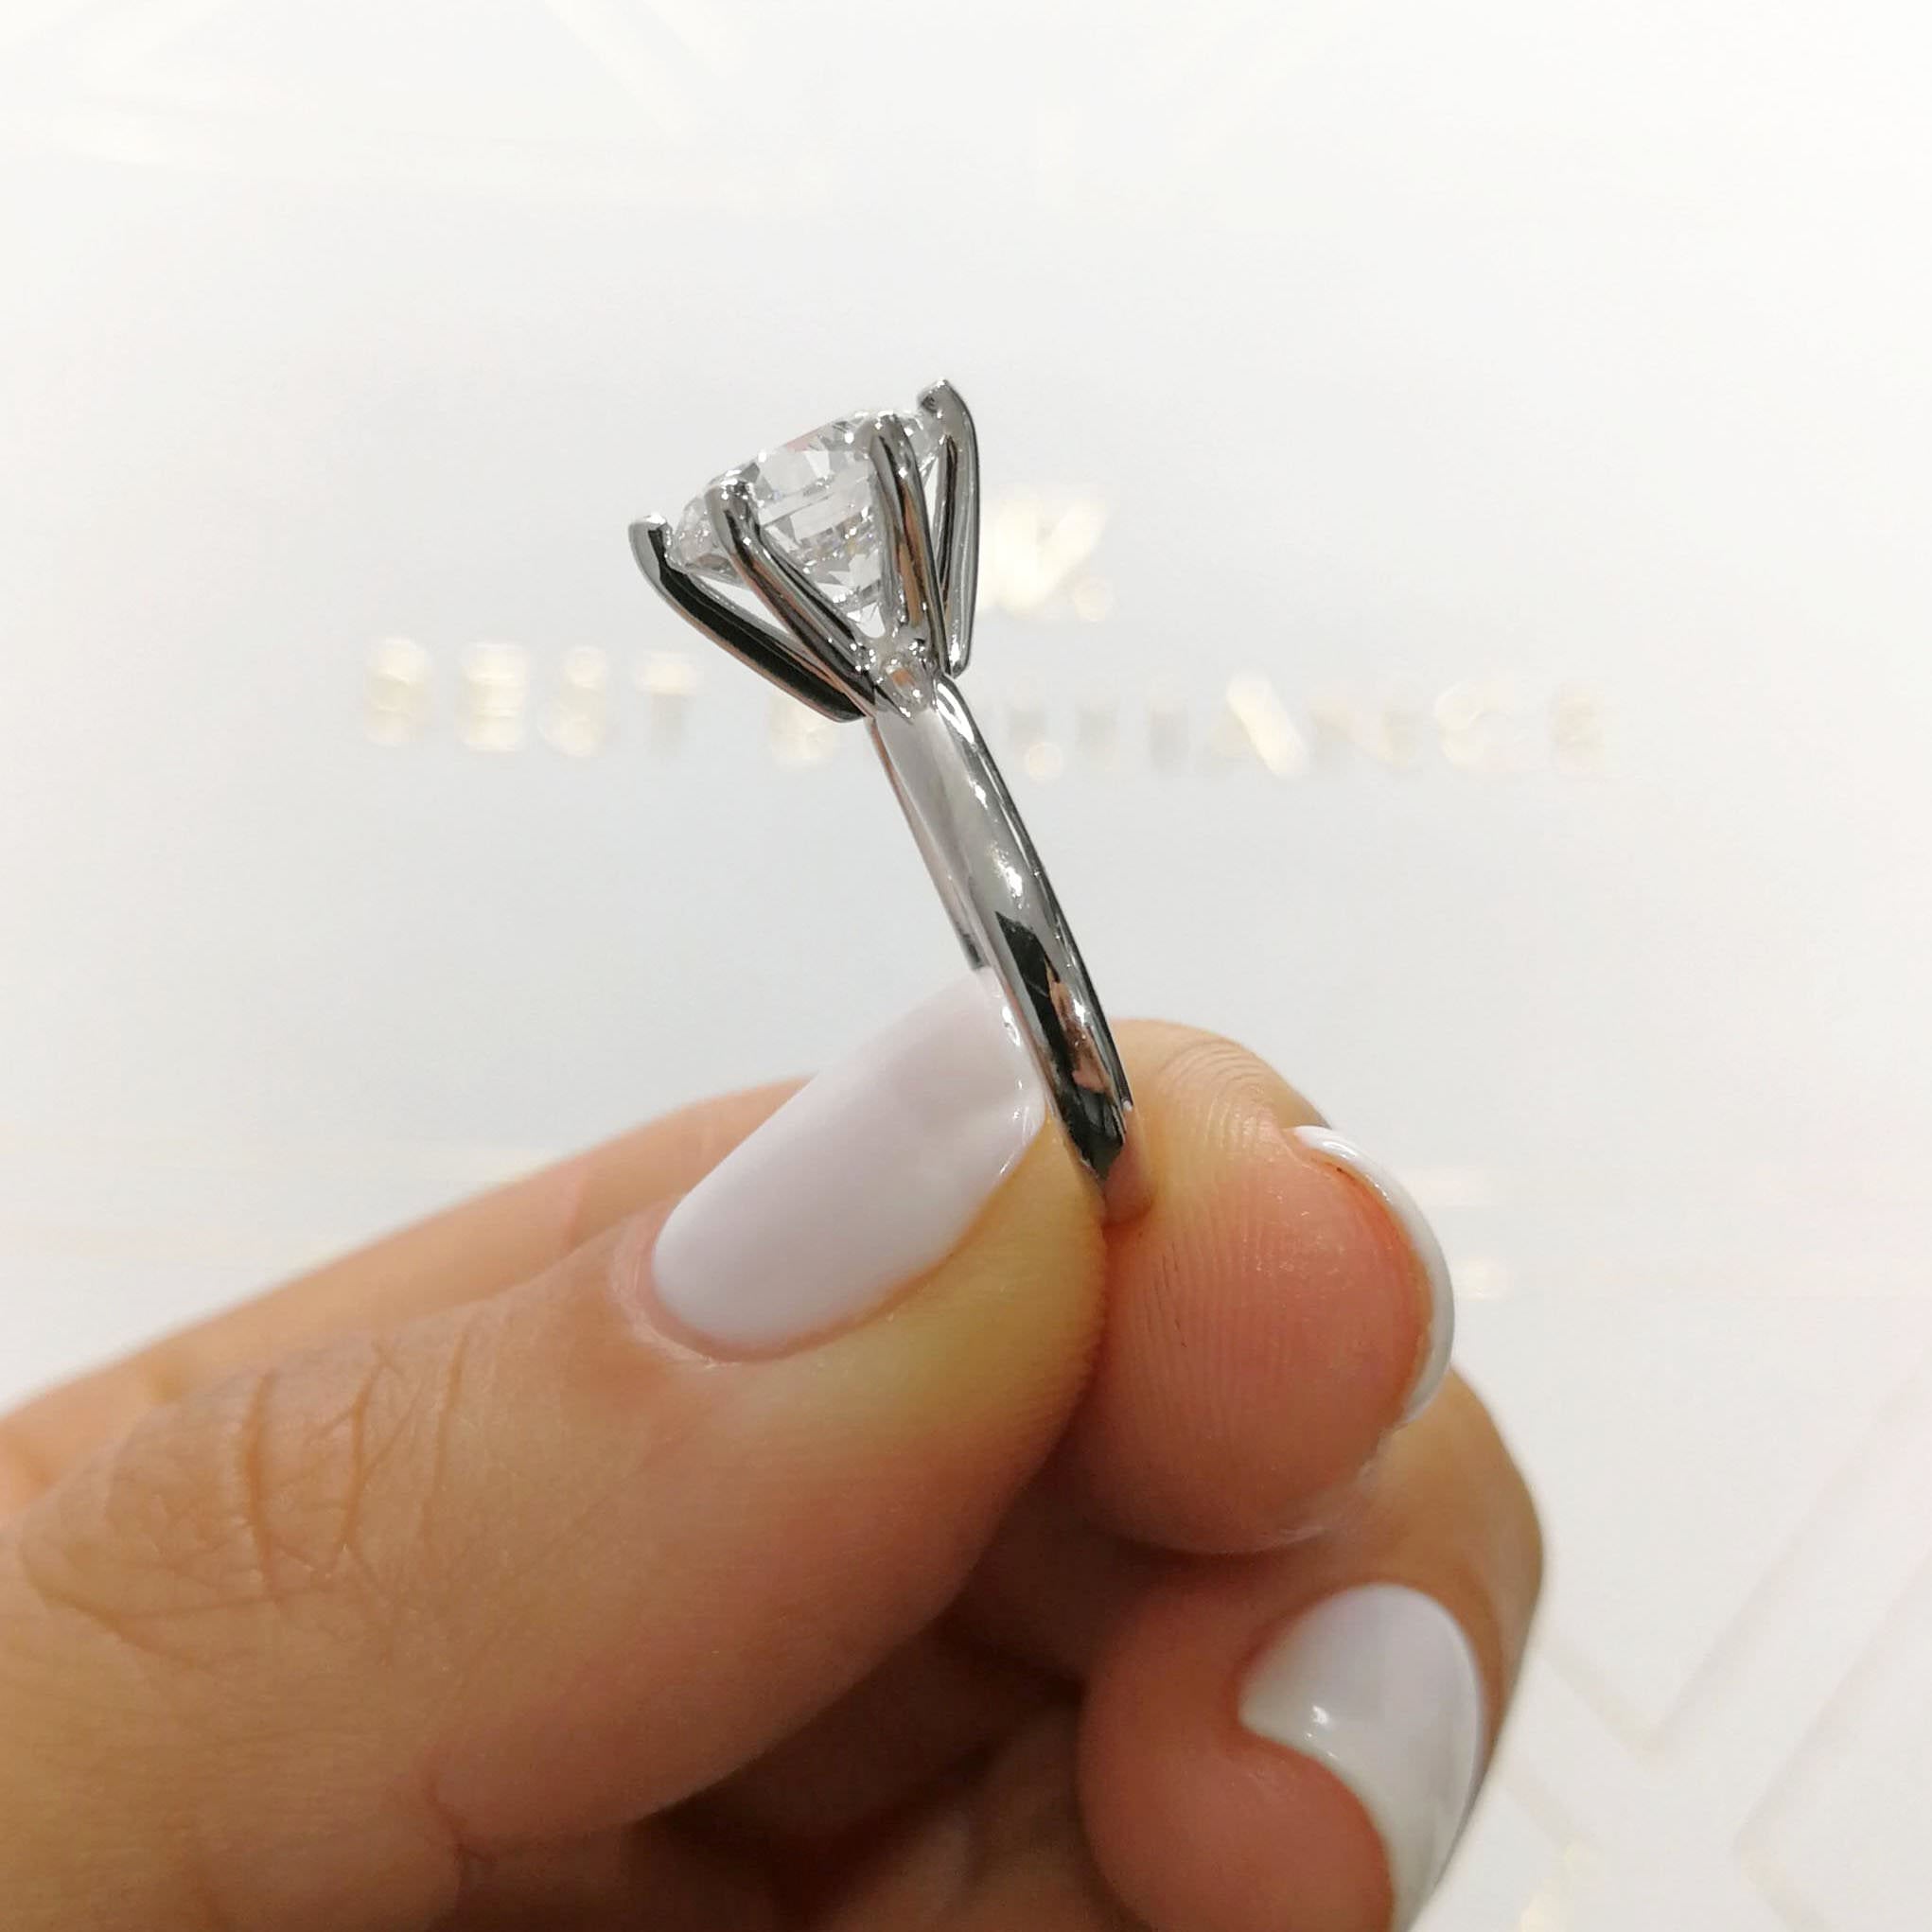 Jessica Diamond Engagement Ring   (2 Carat) -18K White Gold